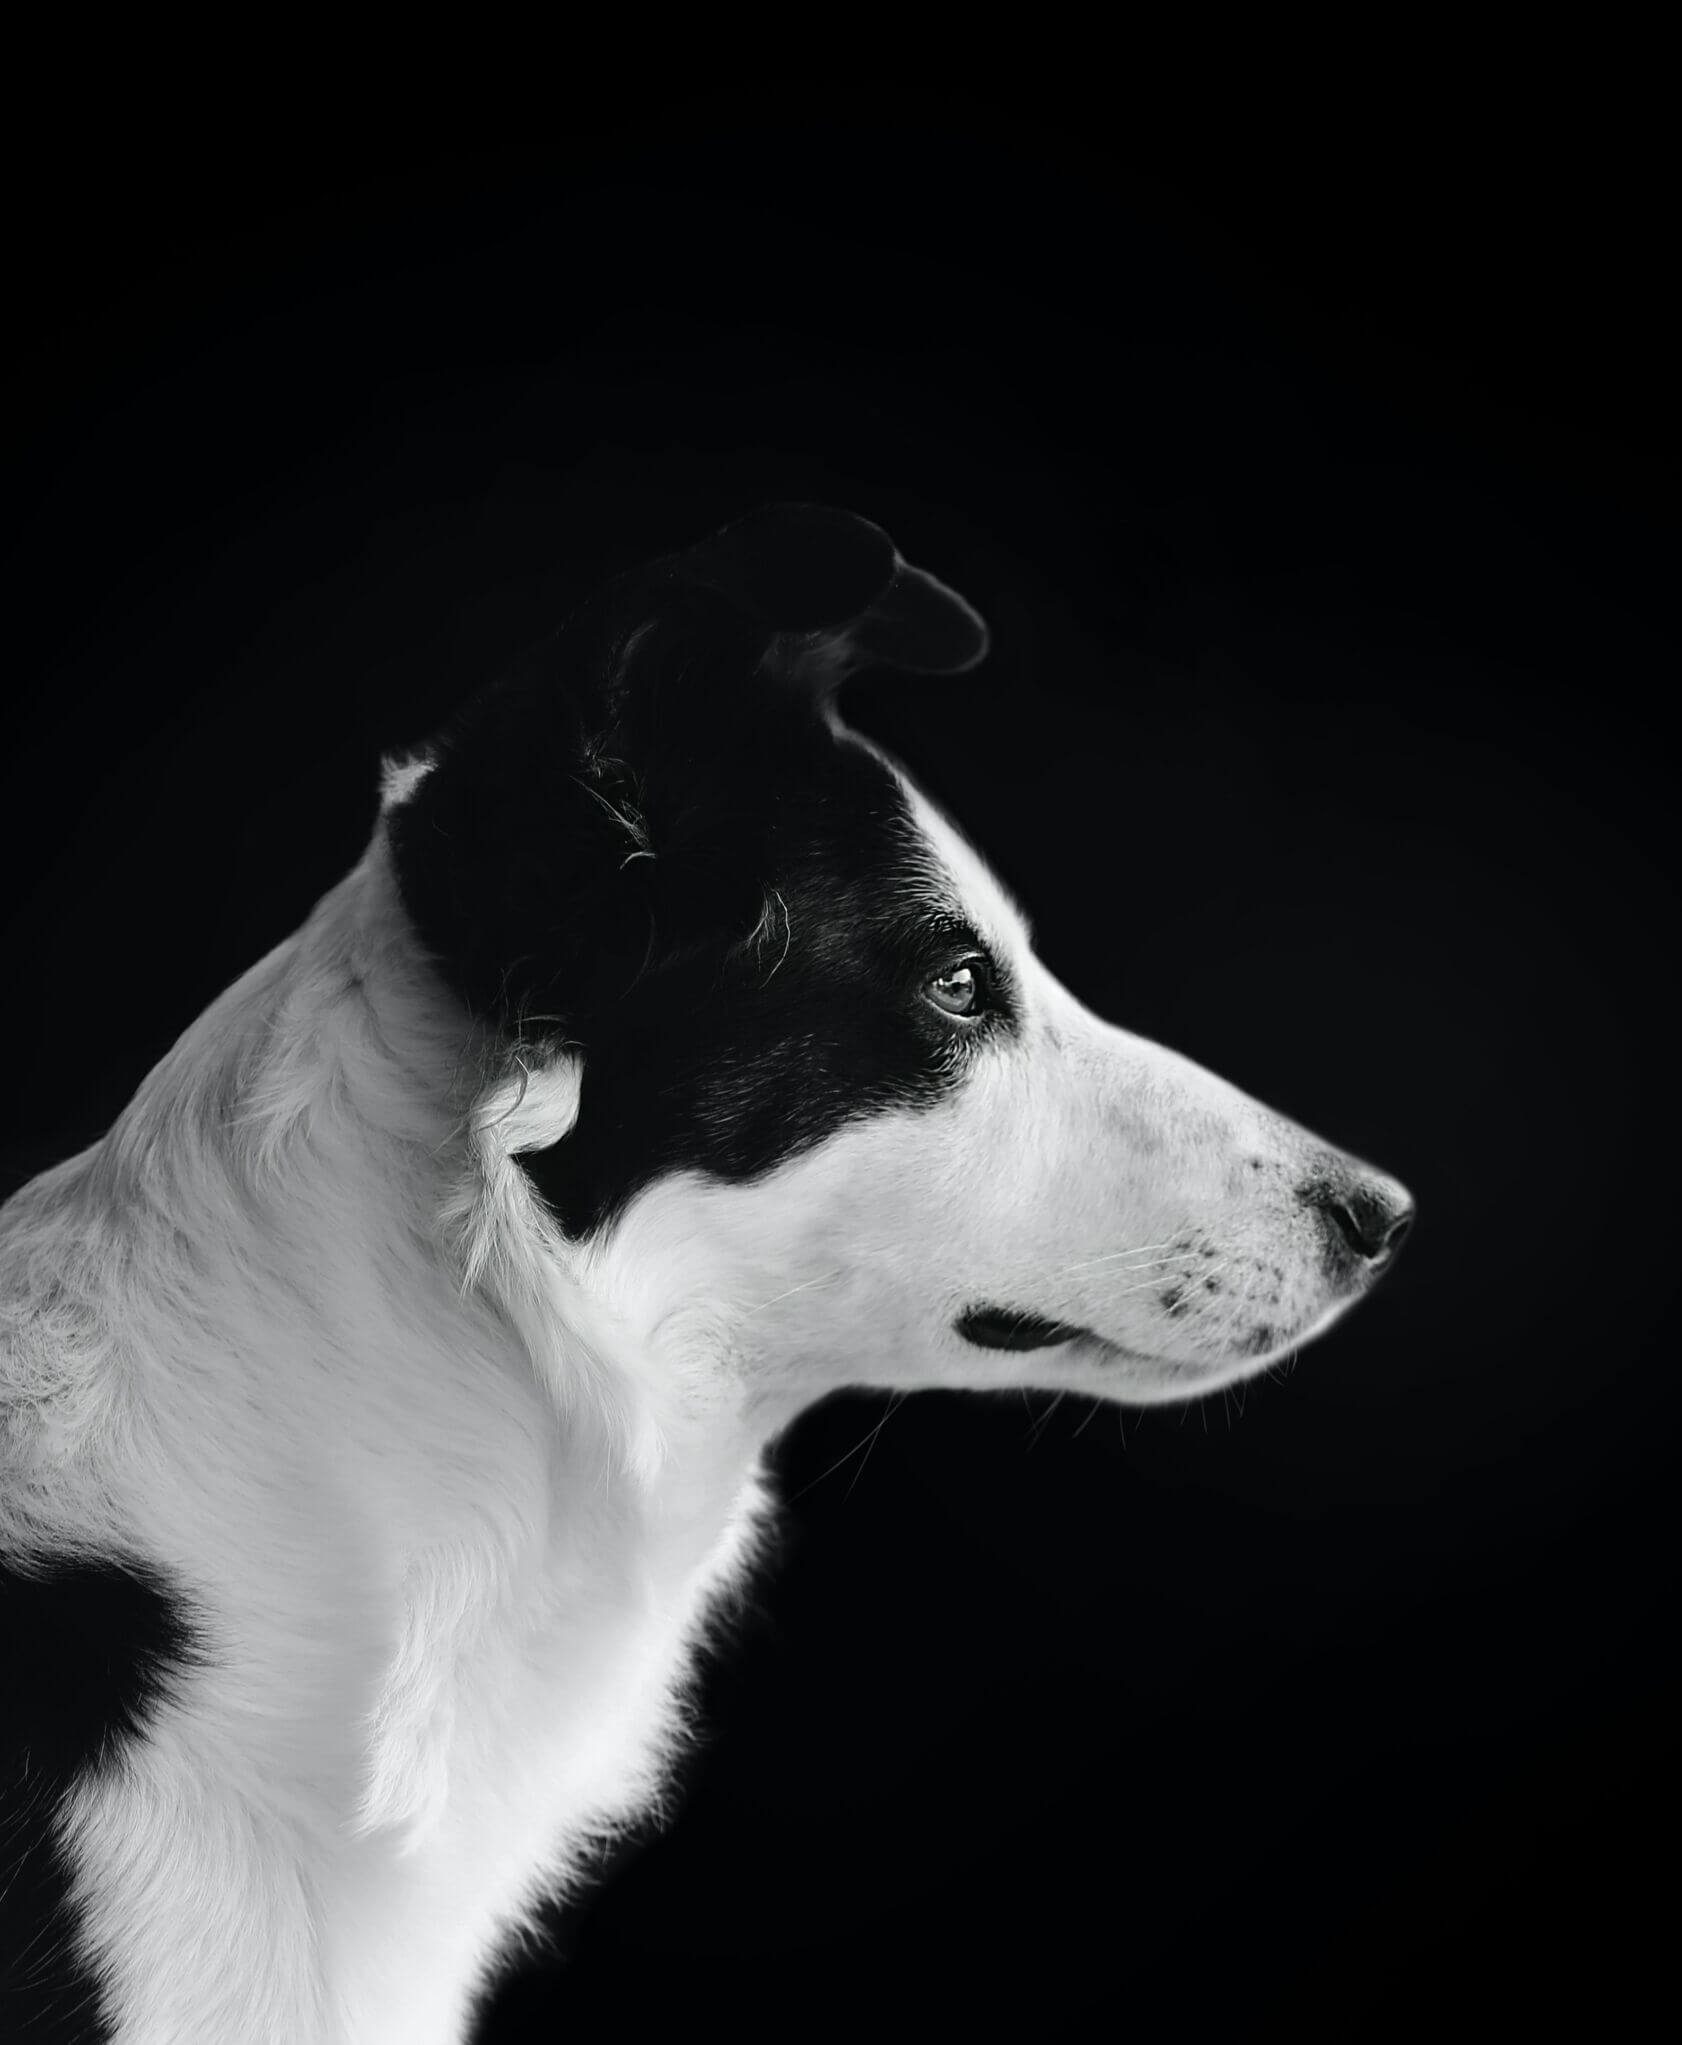 Sheep Dog, side profile, black and white background.